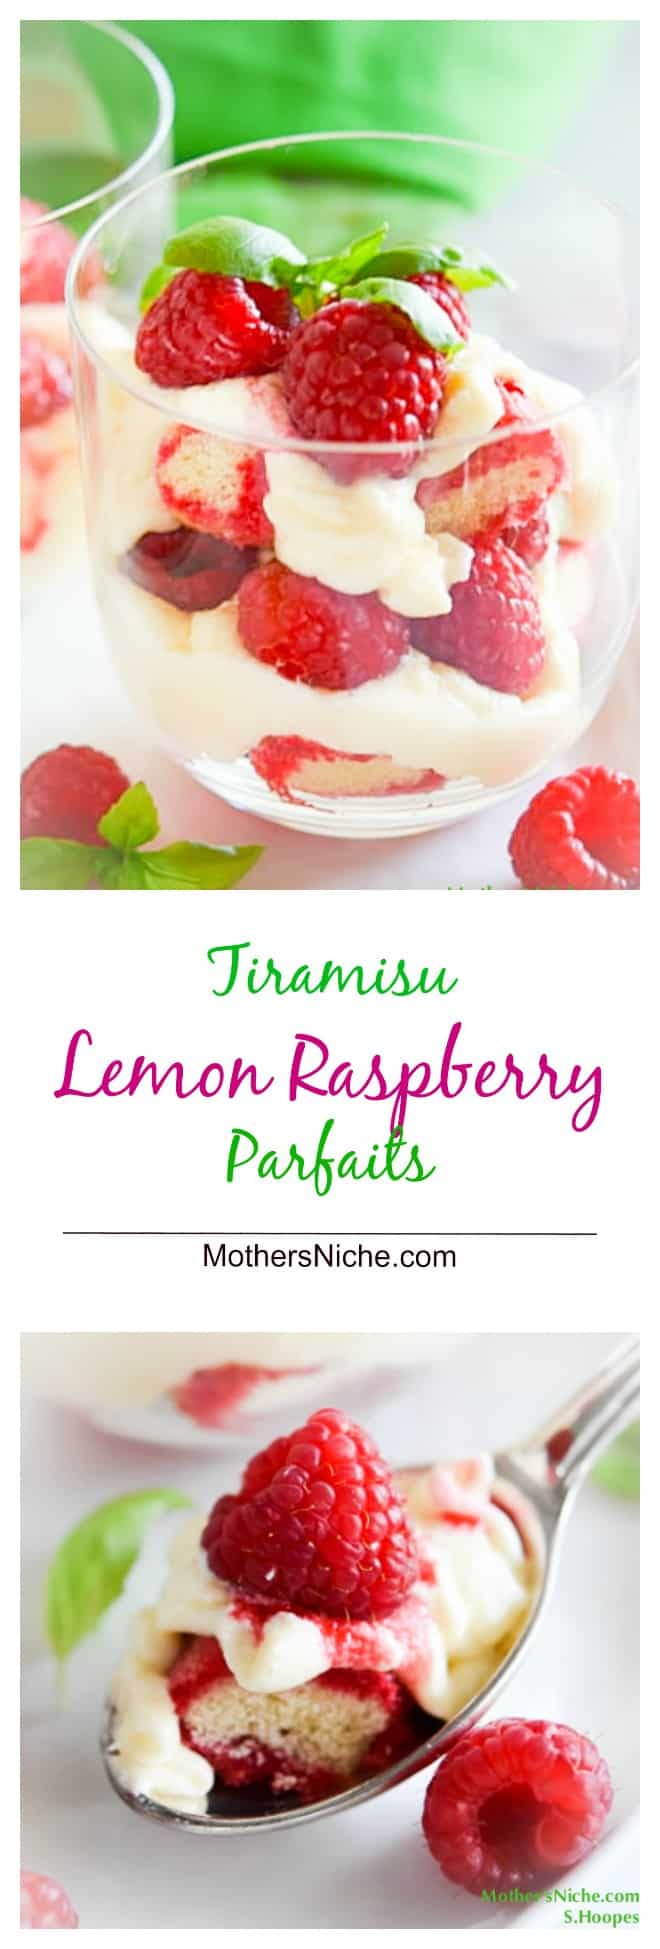 Lemon Raspberry Tiramisu Parfaits-Mother's Niche